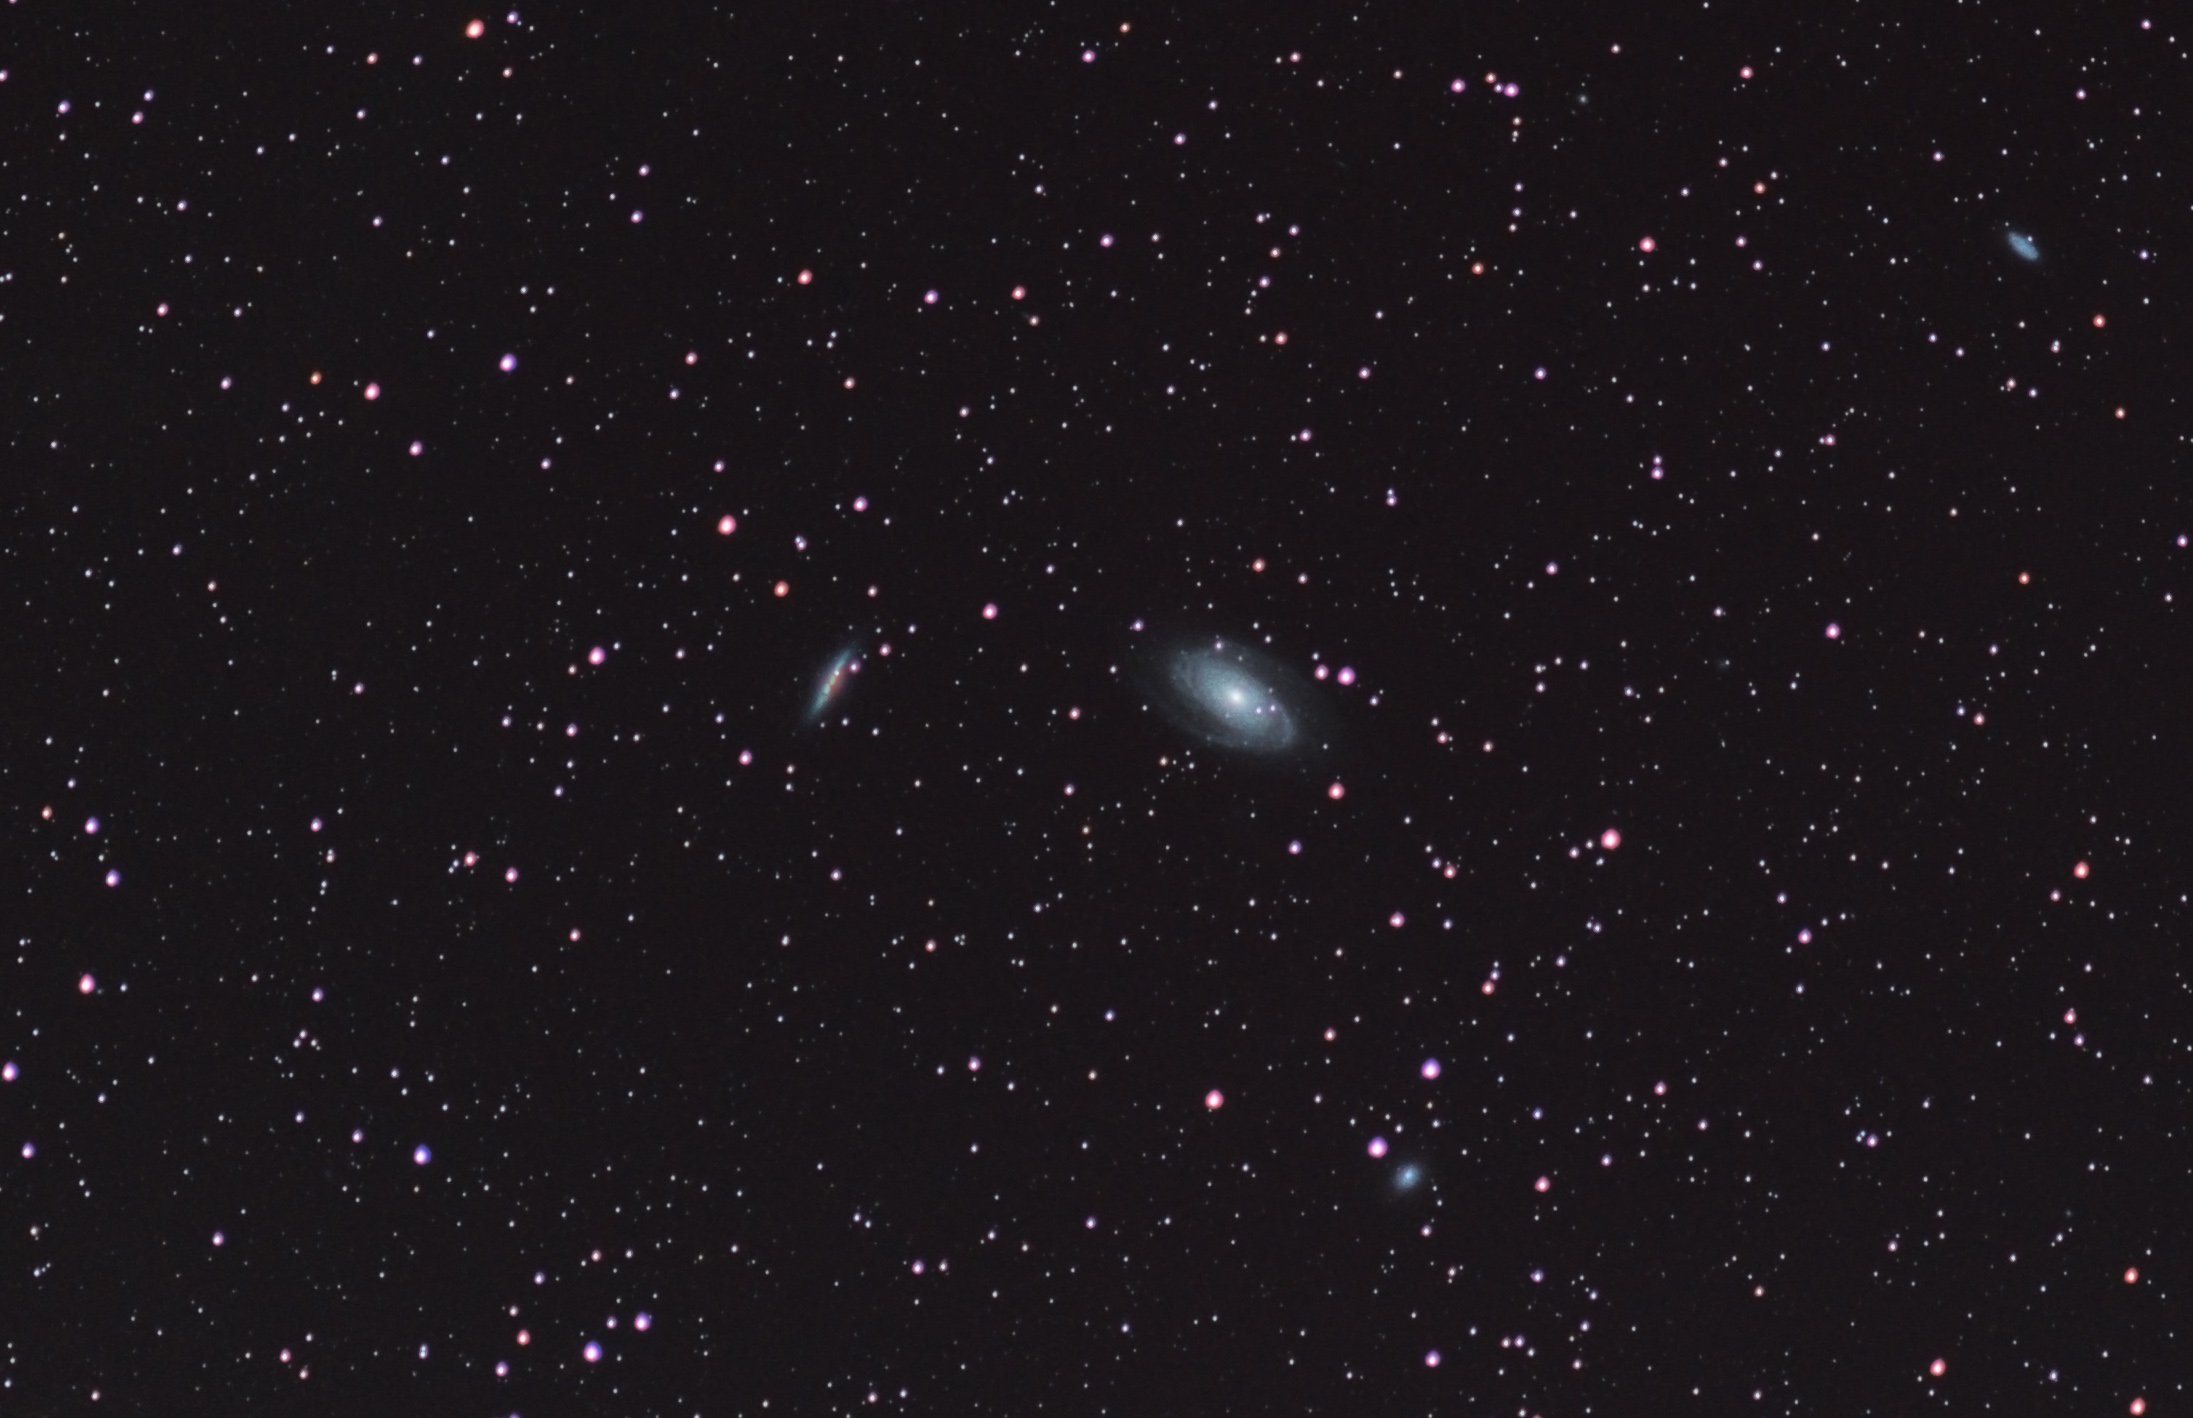 cigar galaxy M81 M82 supernova